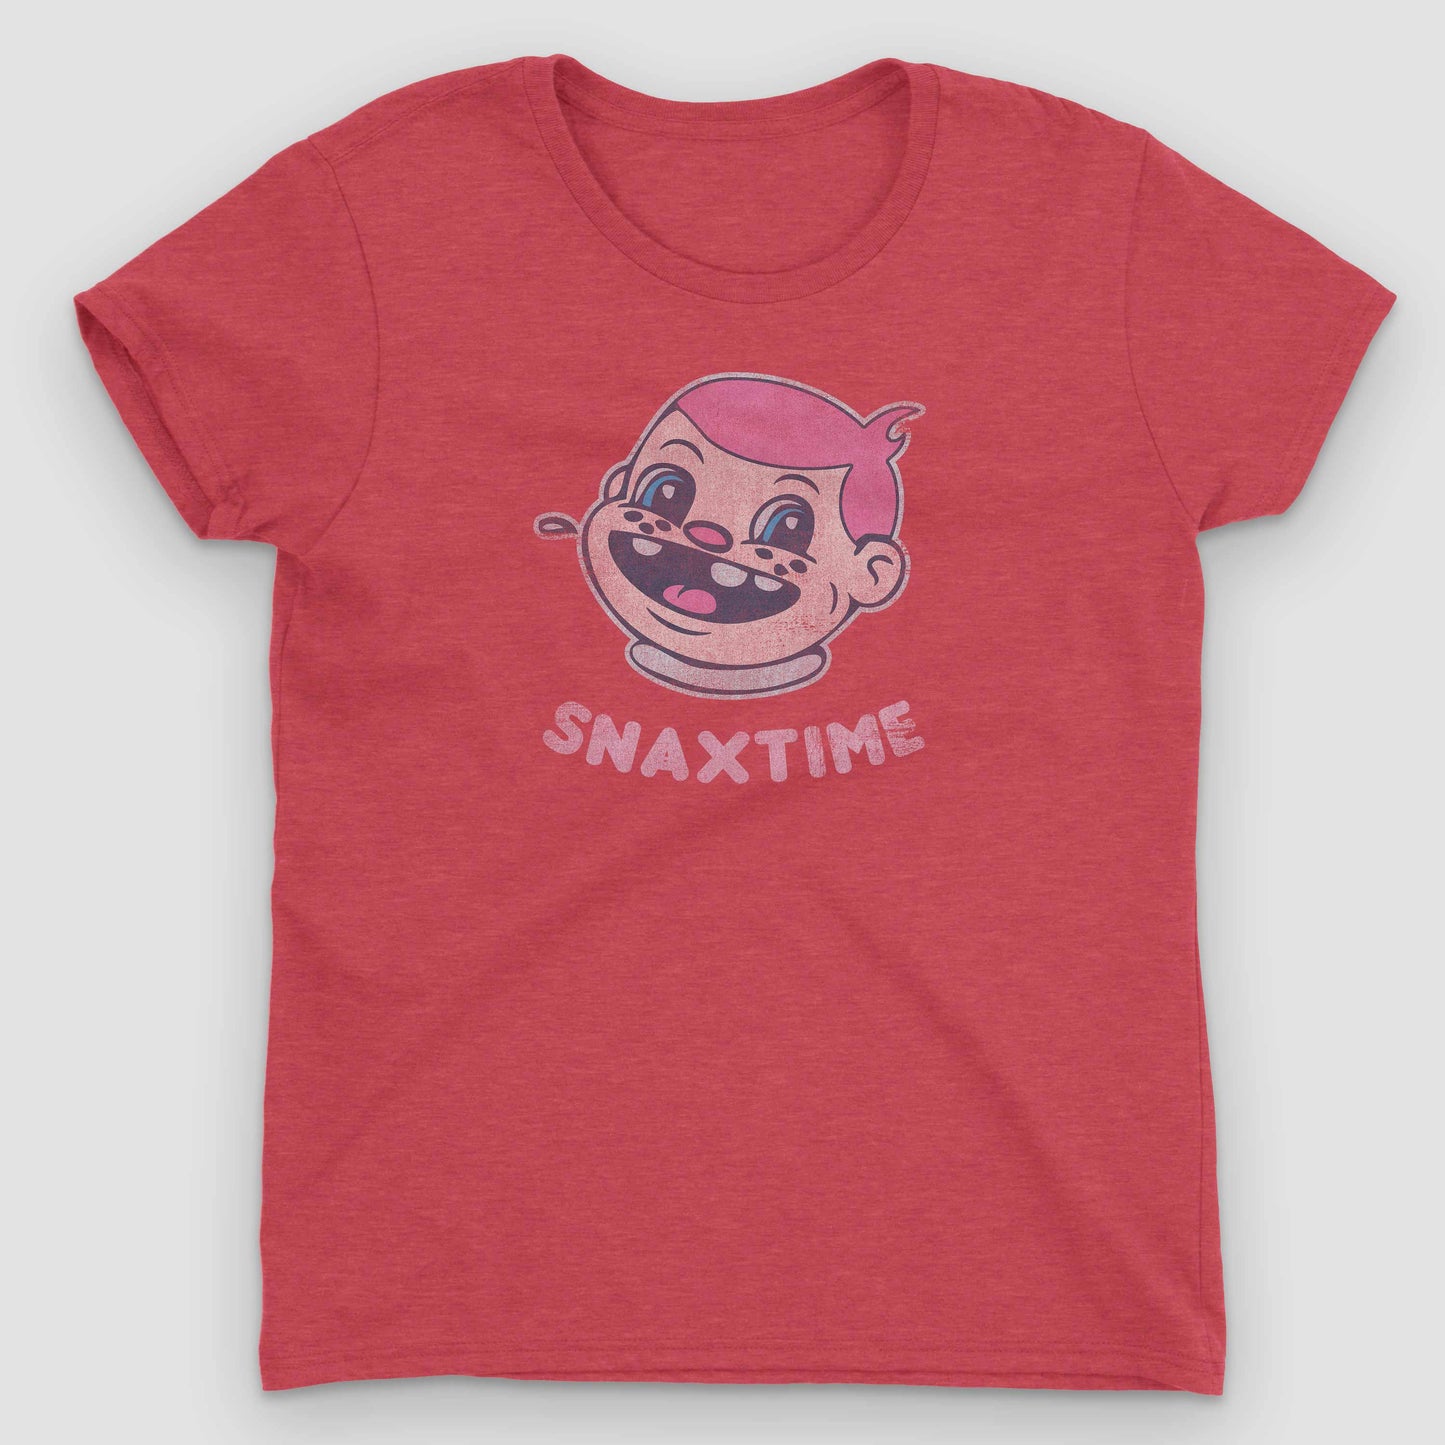 Red Snaxtime Original Women's Graphic T-Shirt by Snaxtime